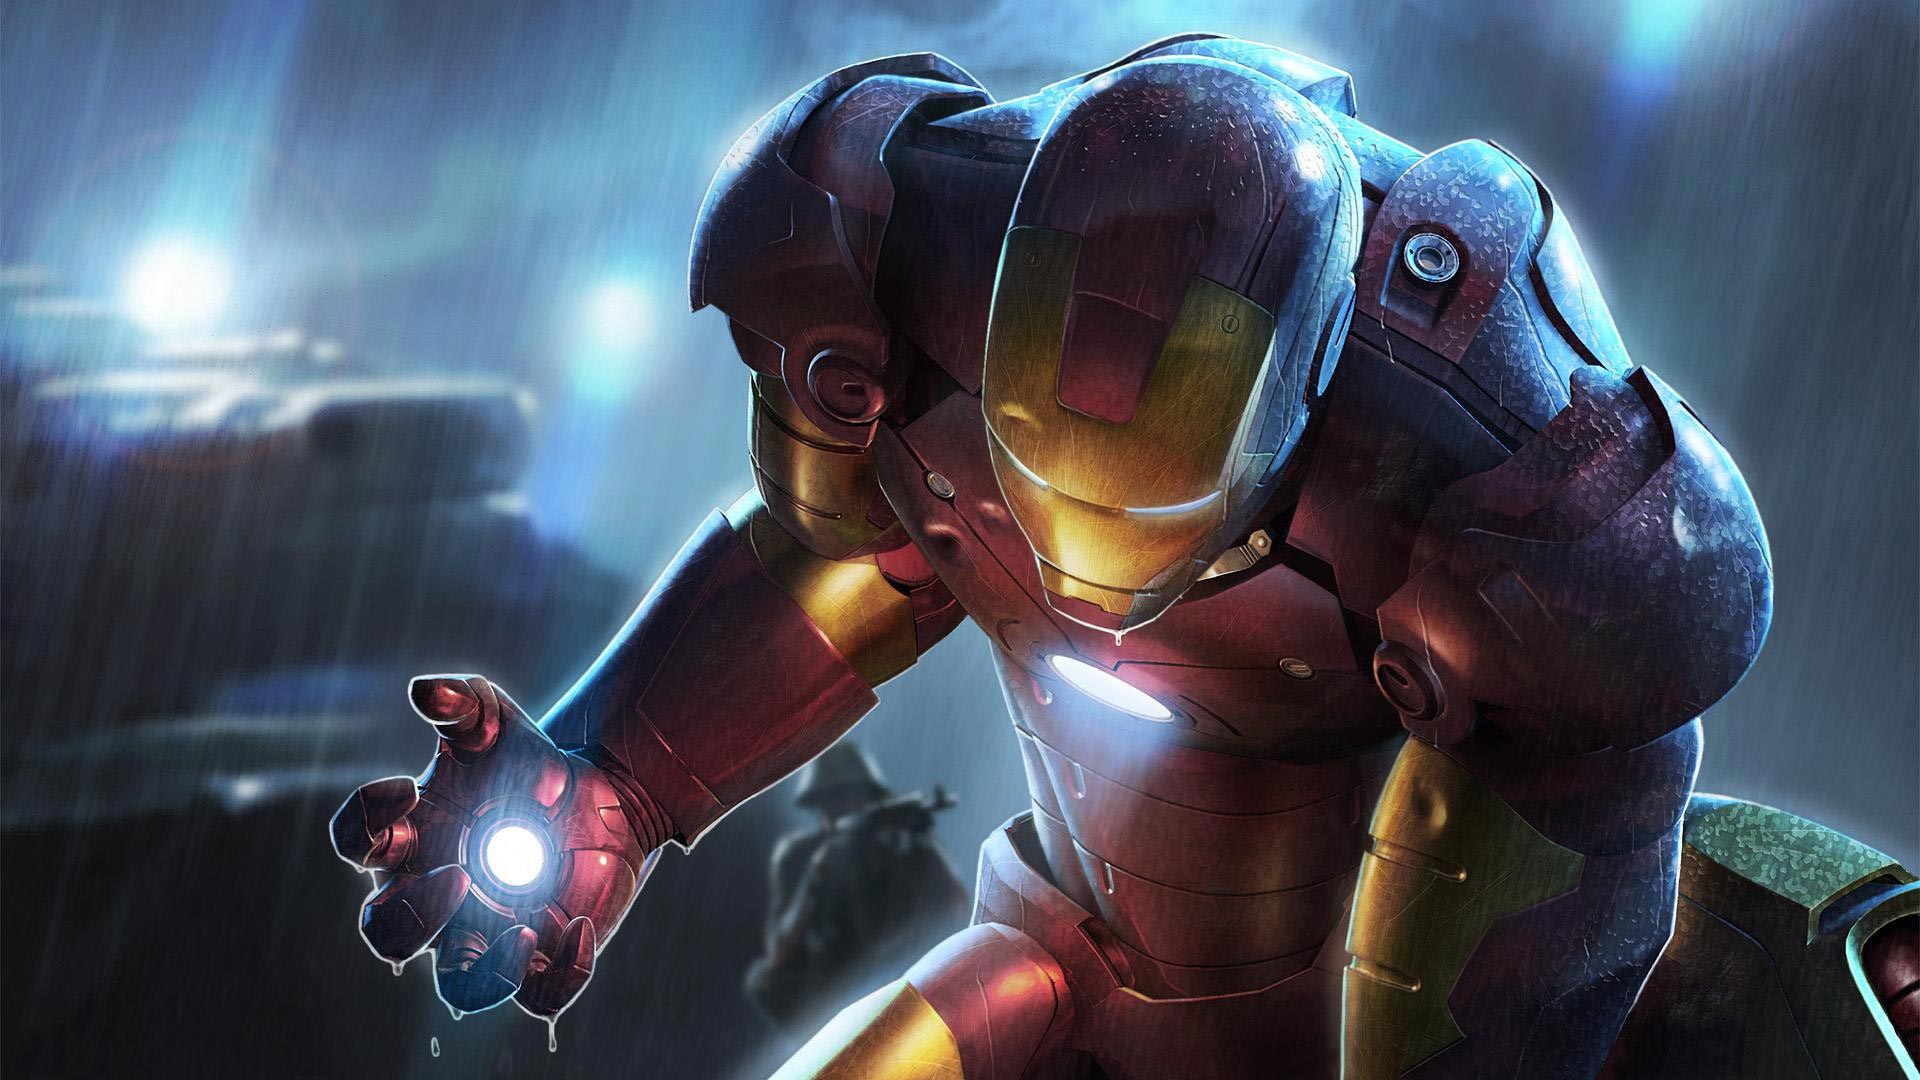 HD Superhero Iron Man Wallpaper 1080p Full Size - HiReWallpapers 10532